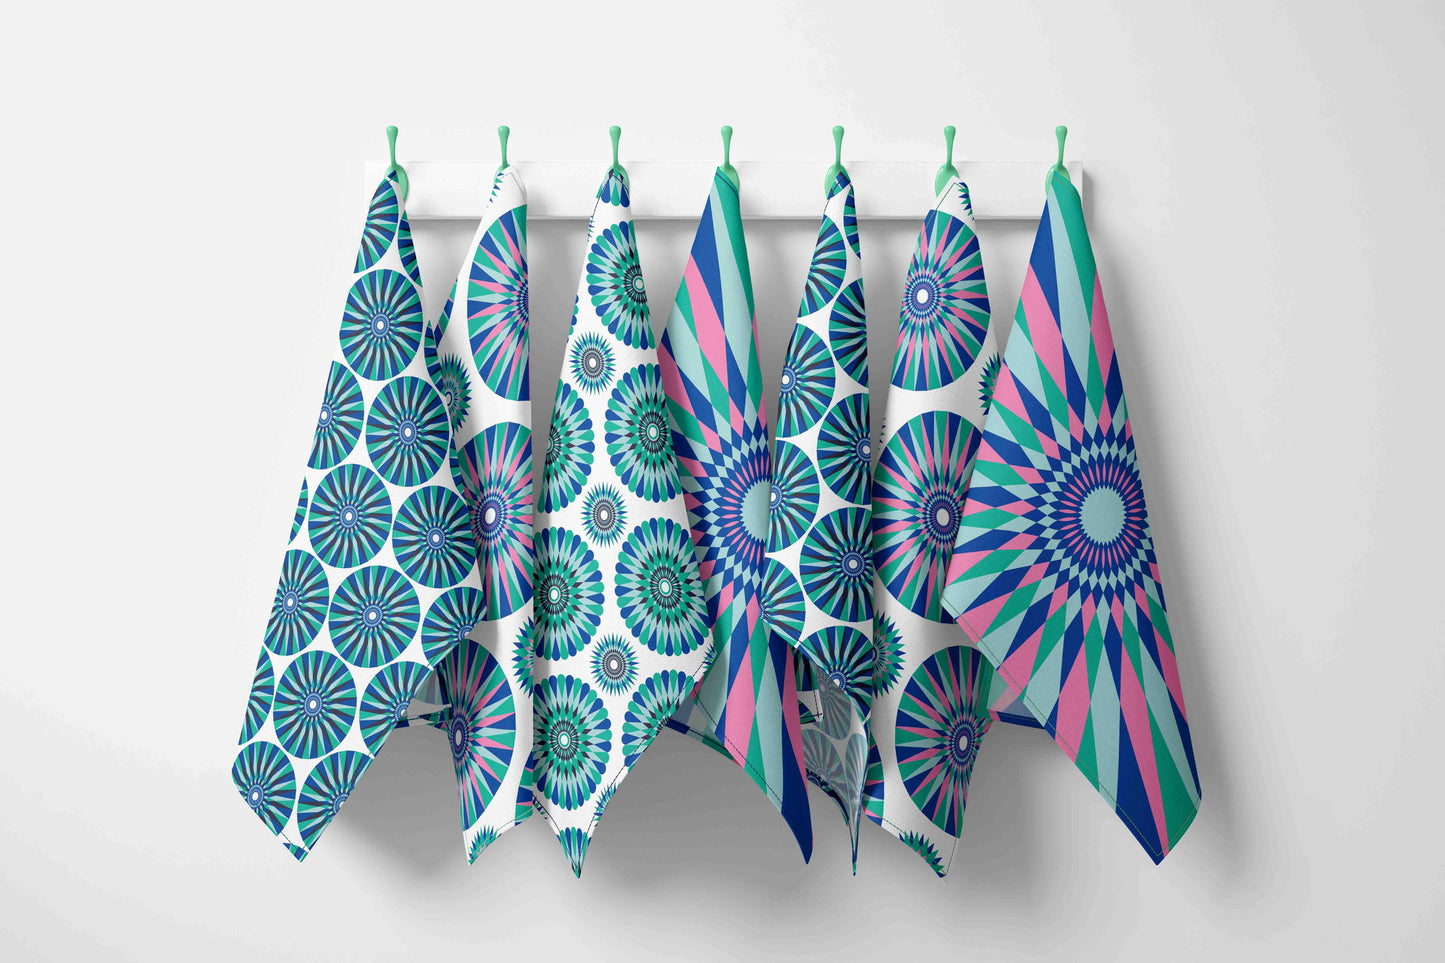 Galactic - Geometric Colourful Tea Towel